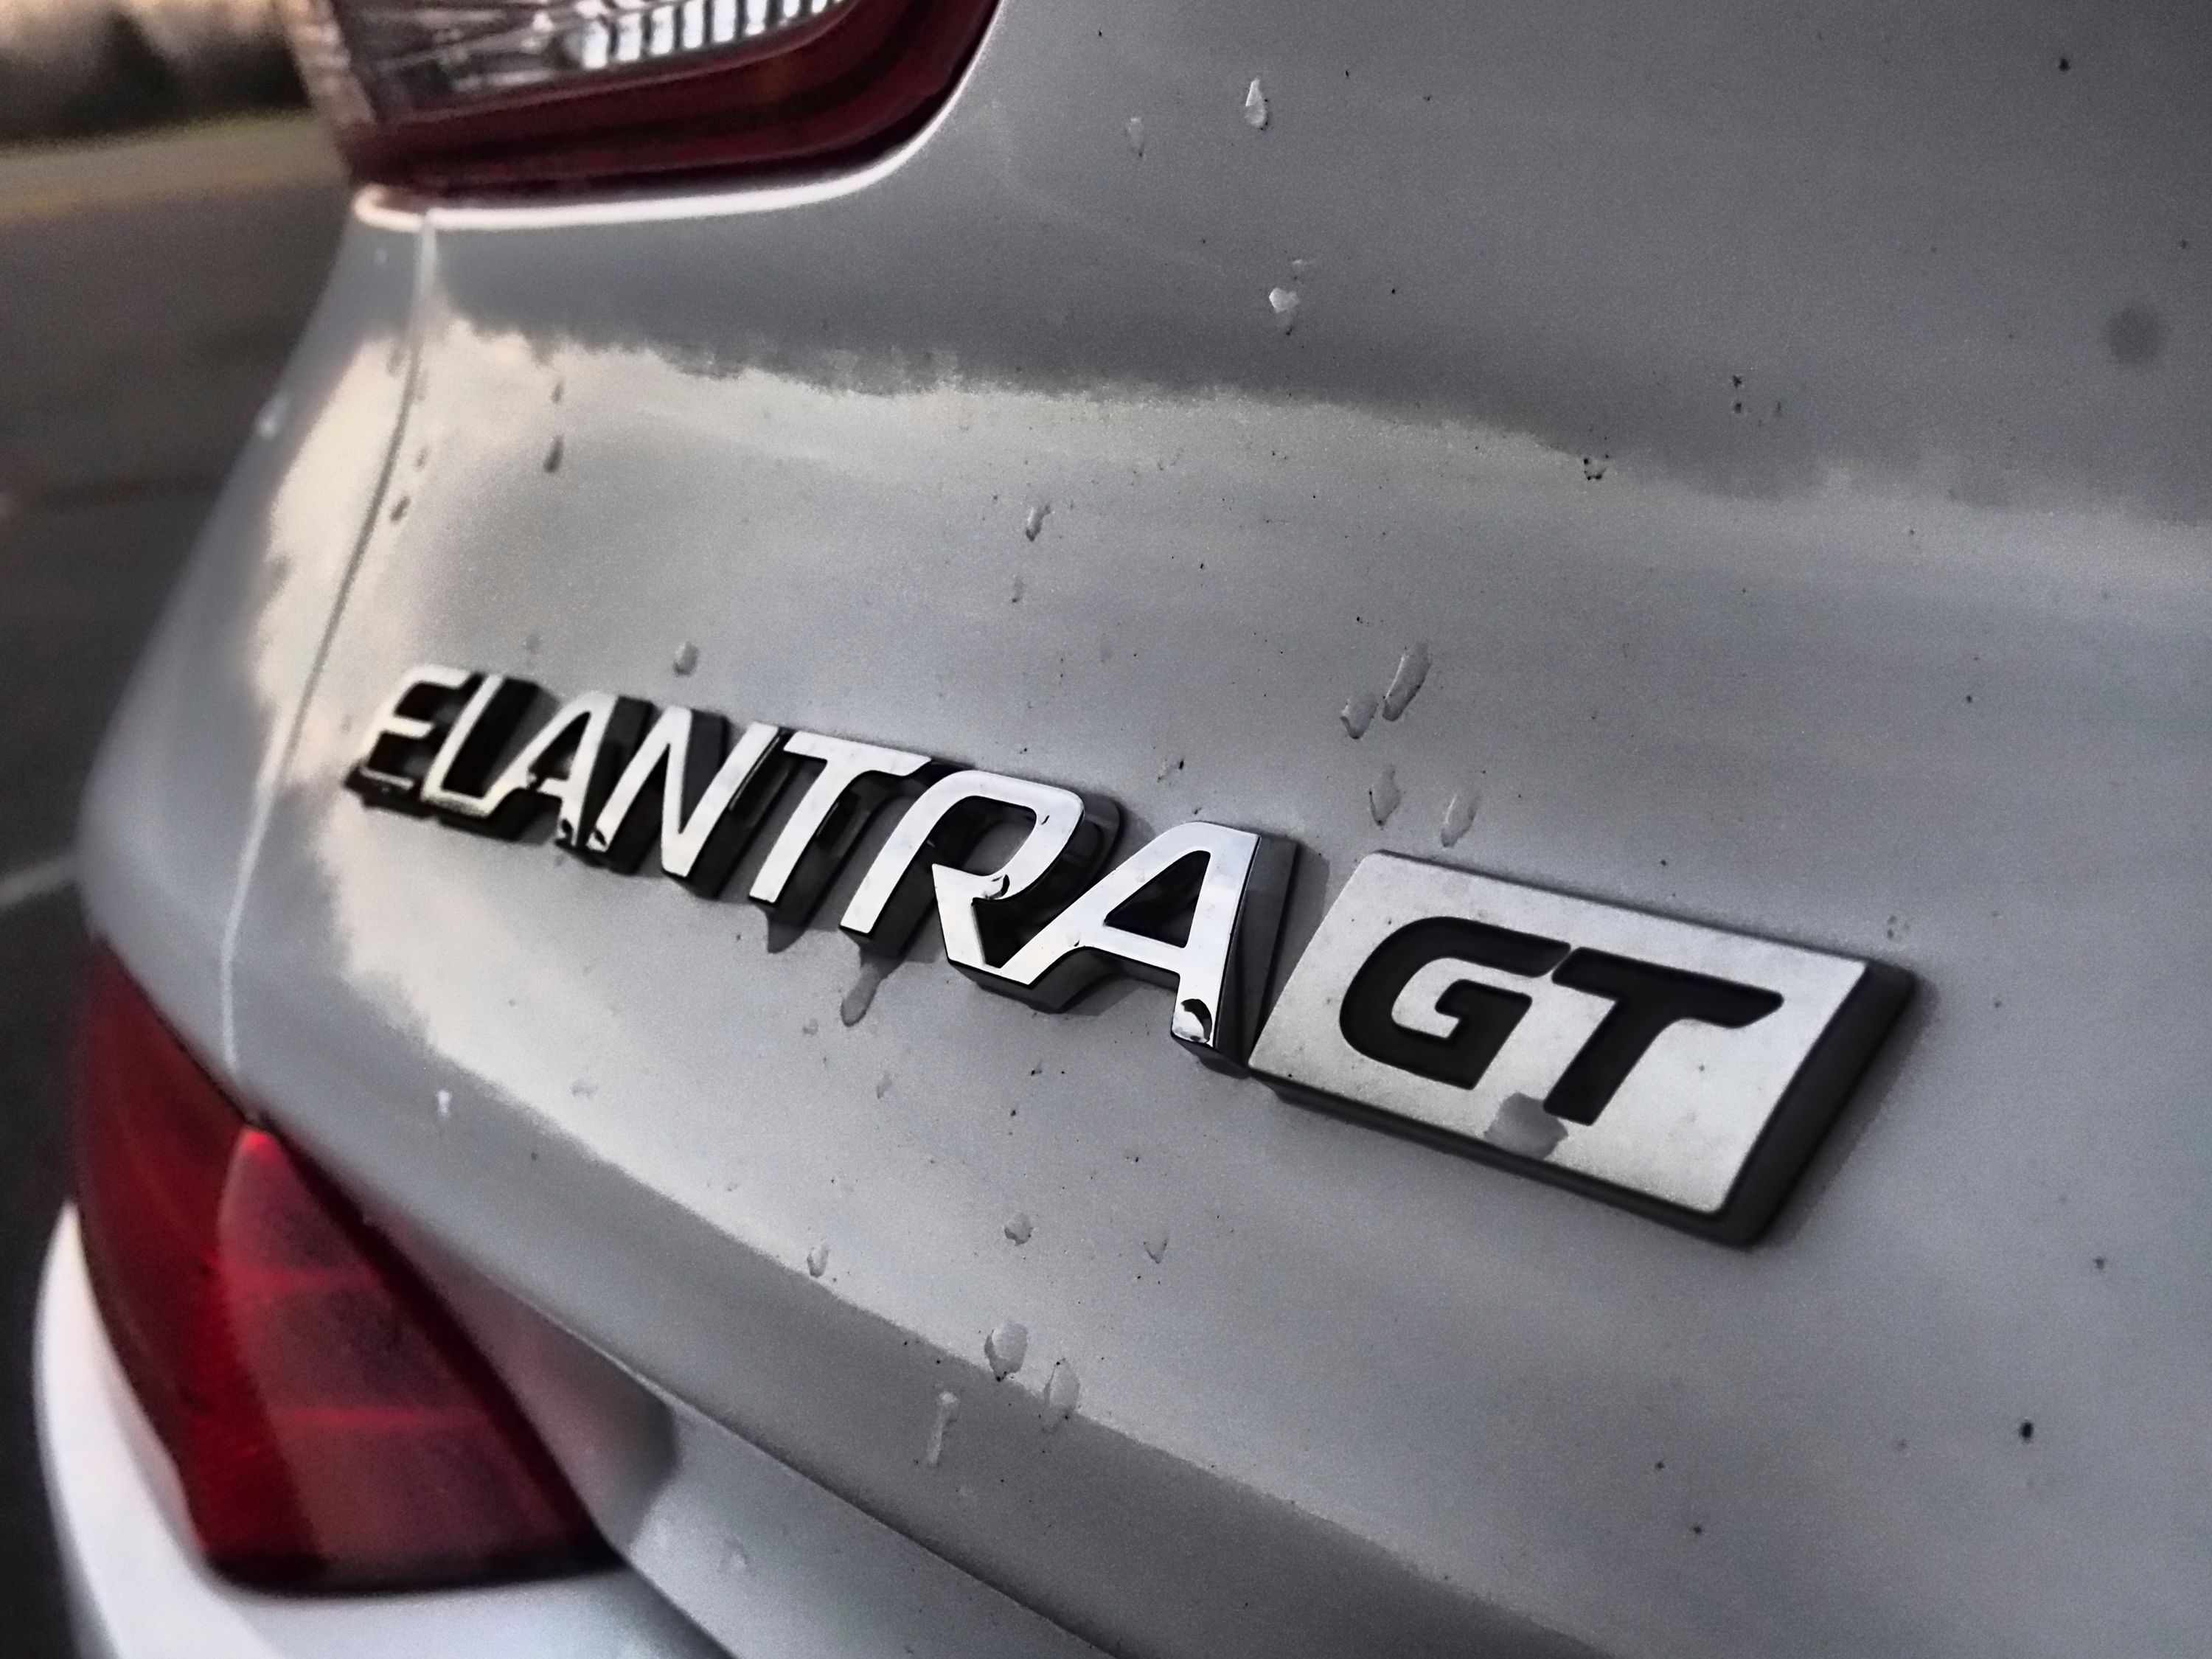 2018 Hyundai Elantra GT - Driven